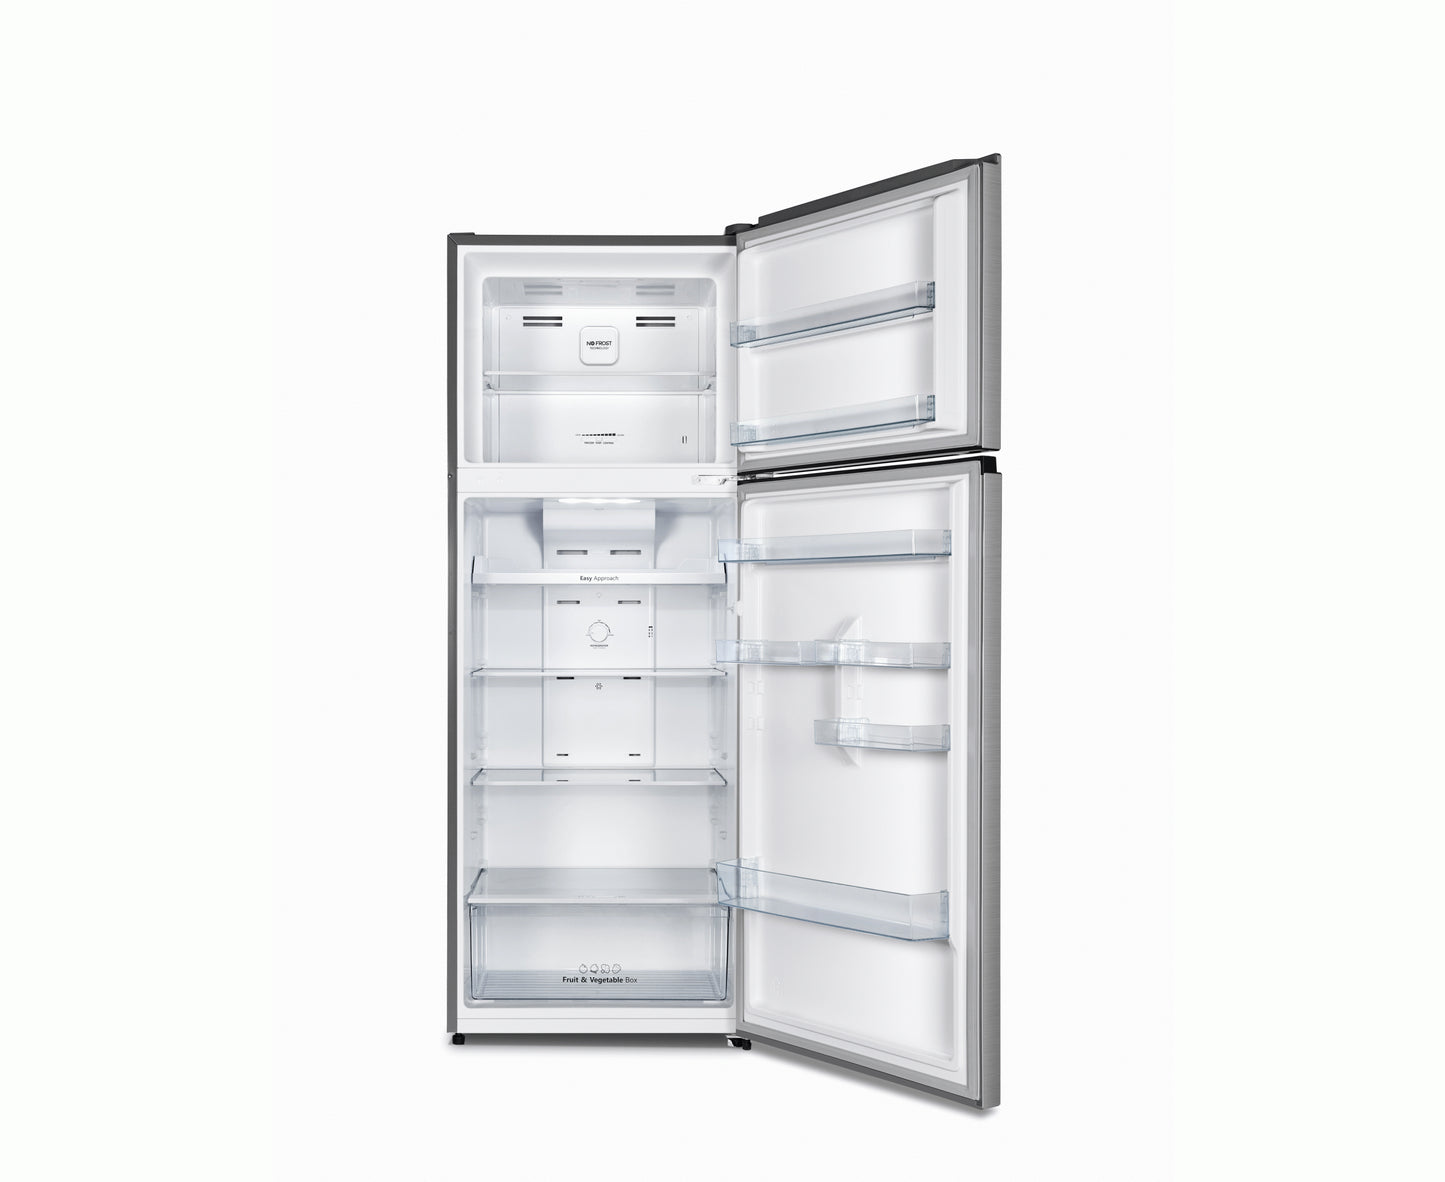 Hisense REF 60WR-RD 466 litres Top Freezer Refrigerator